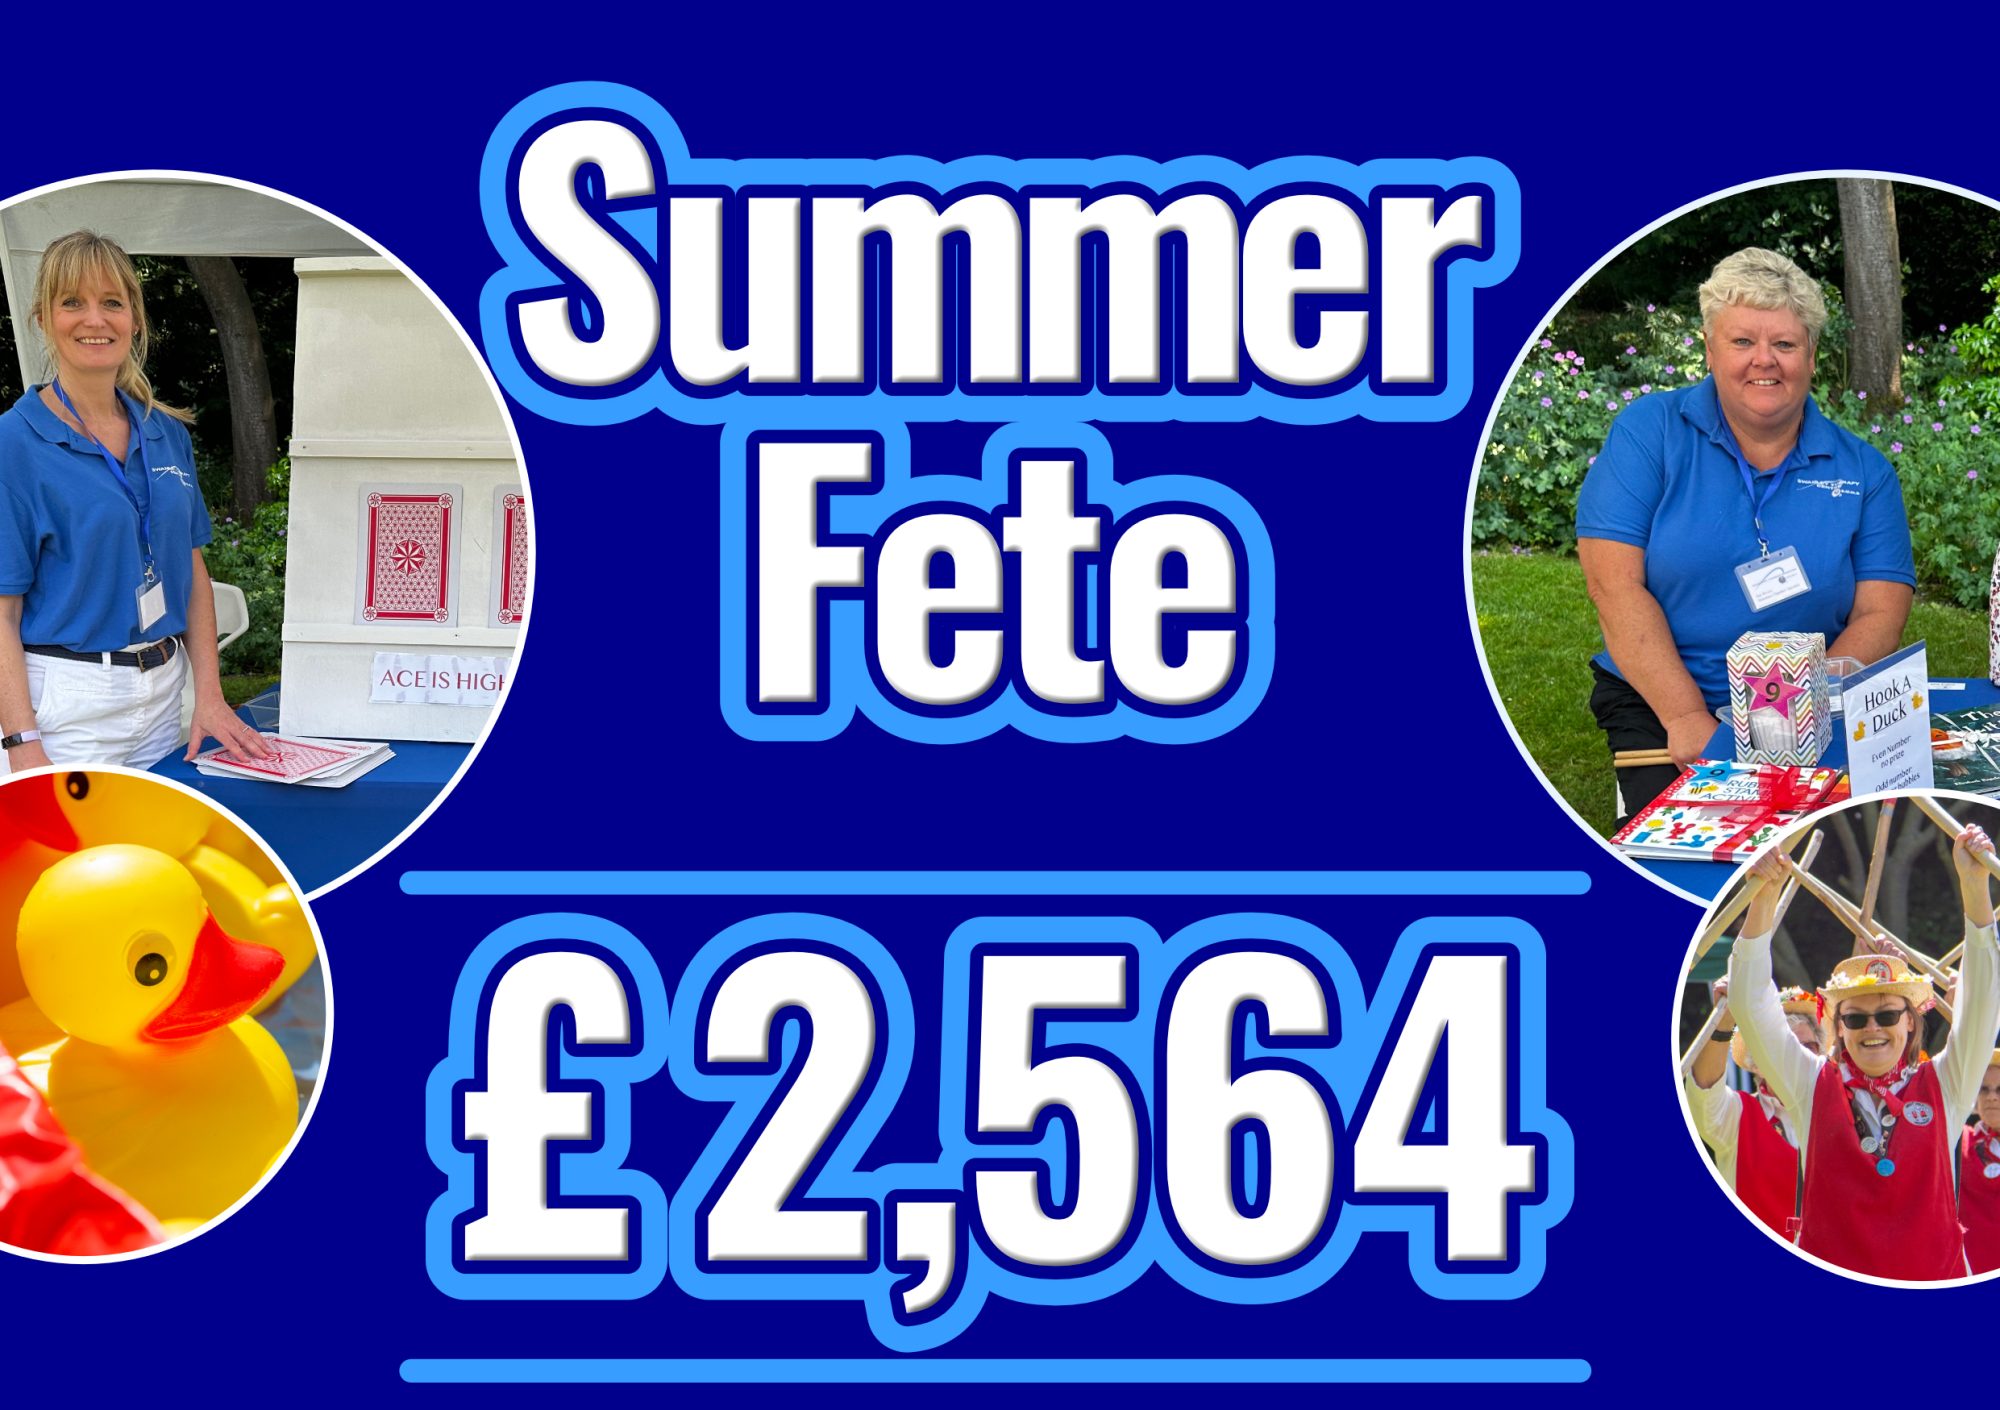 Summer Fete - £2,564